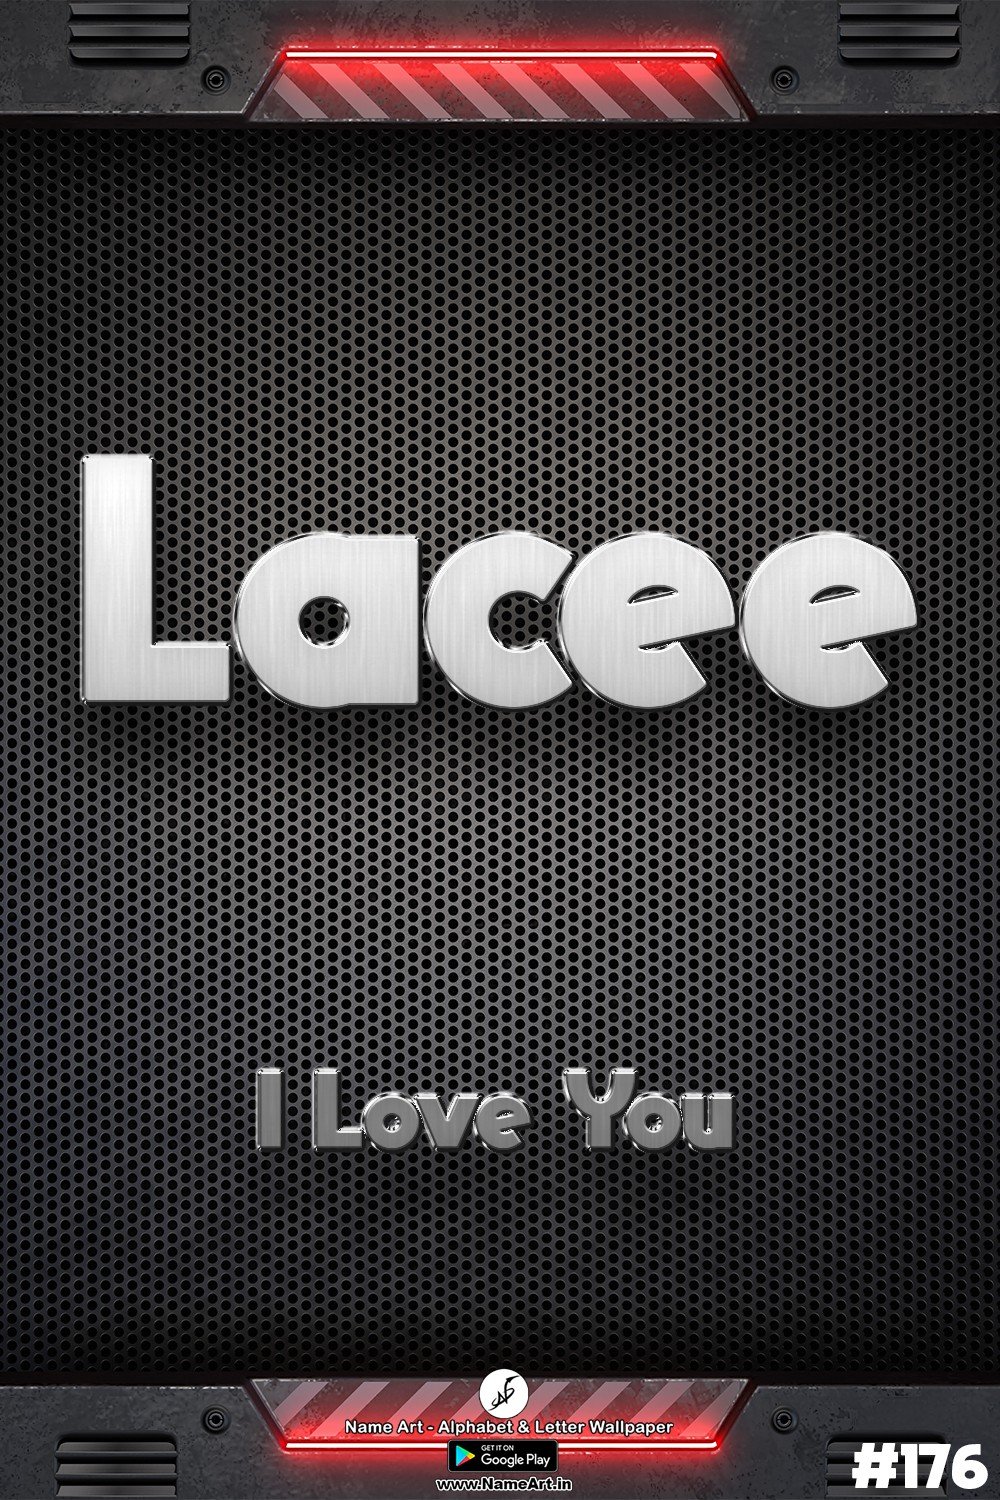 Lacee | Whatsapp Status Lacee | Happy Birthday Lacee !! | New Whatsapp Status Lacee Images |